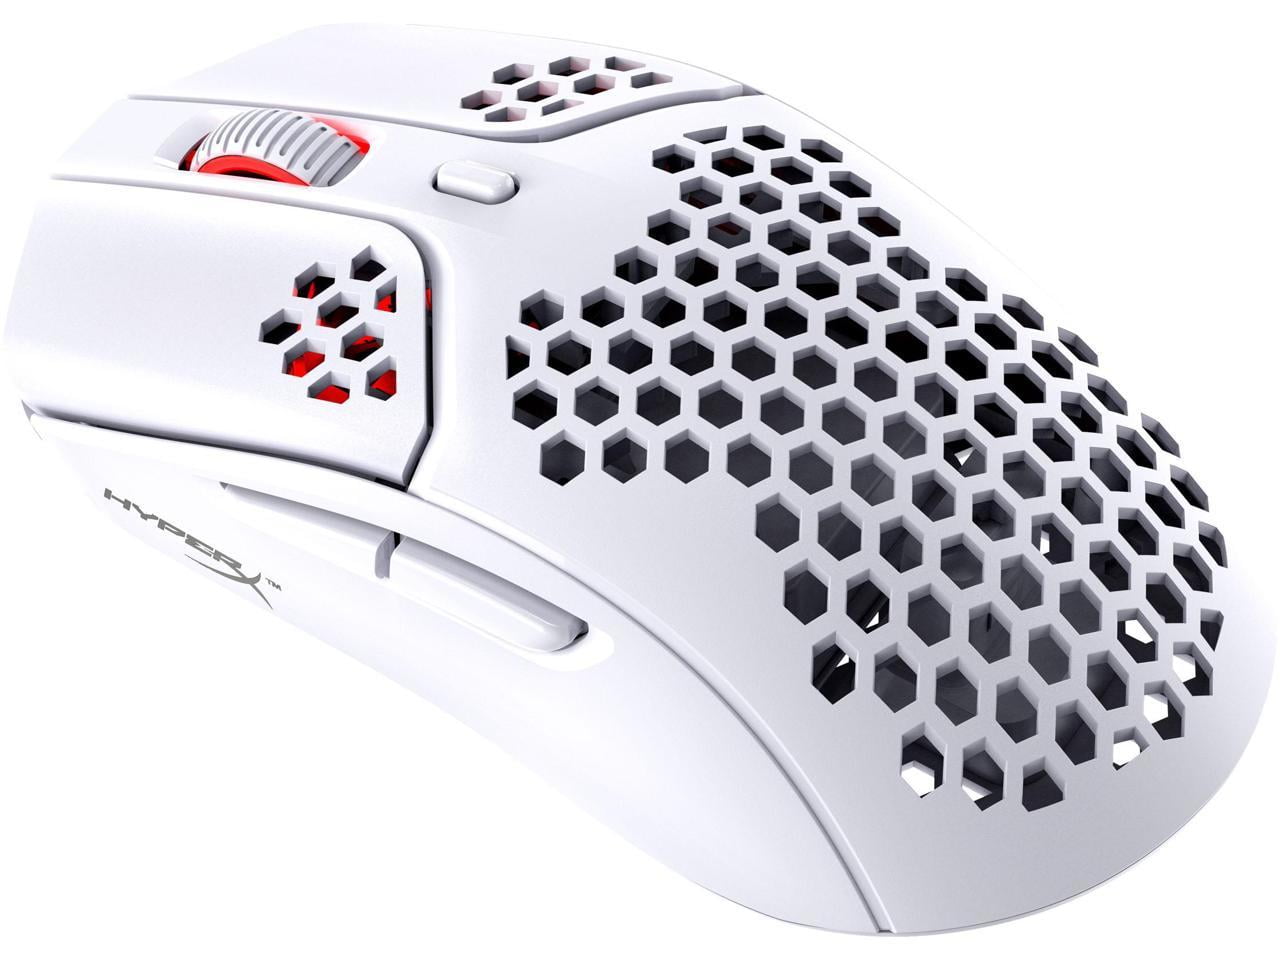 HyperX Pulsefire RGB Mouse Mat Hands-On: Great for Larger Desks